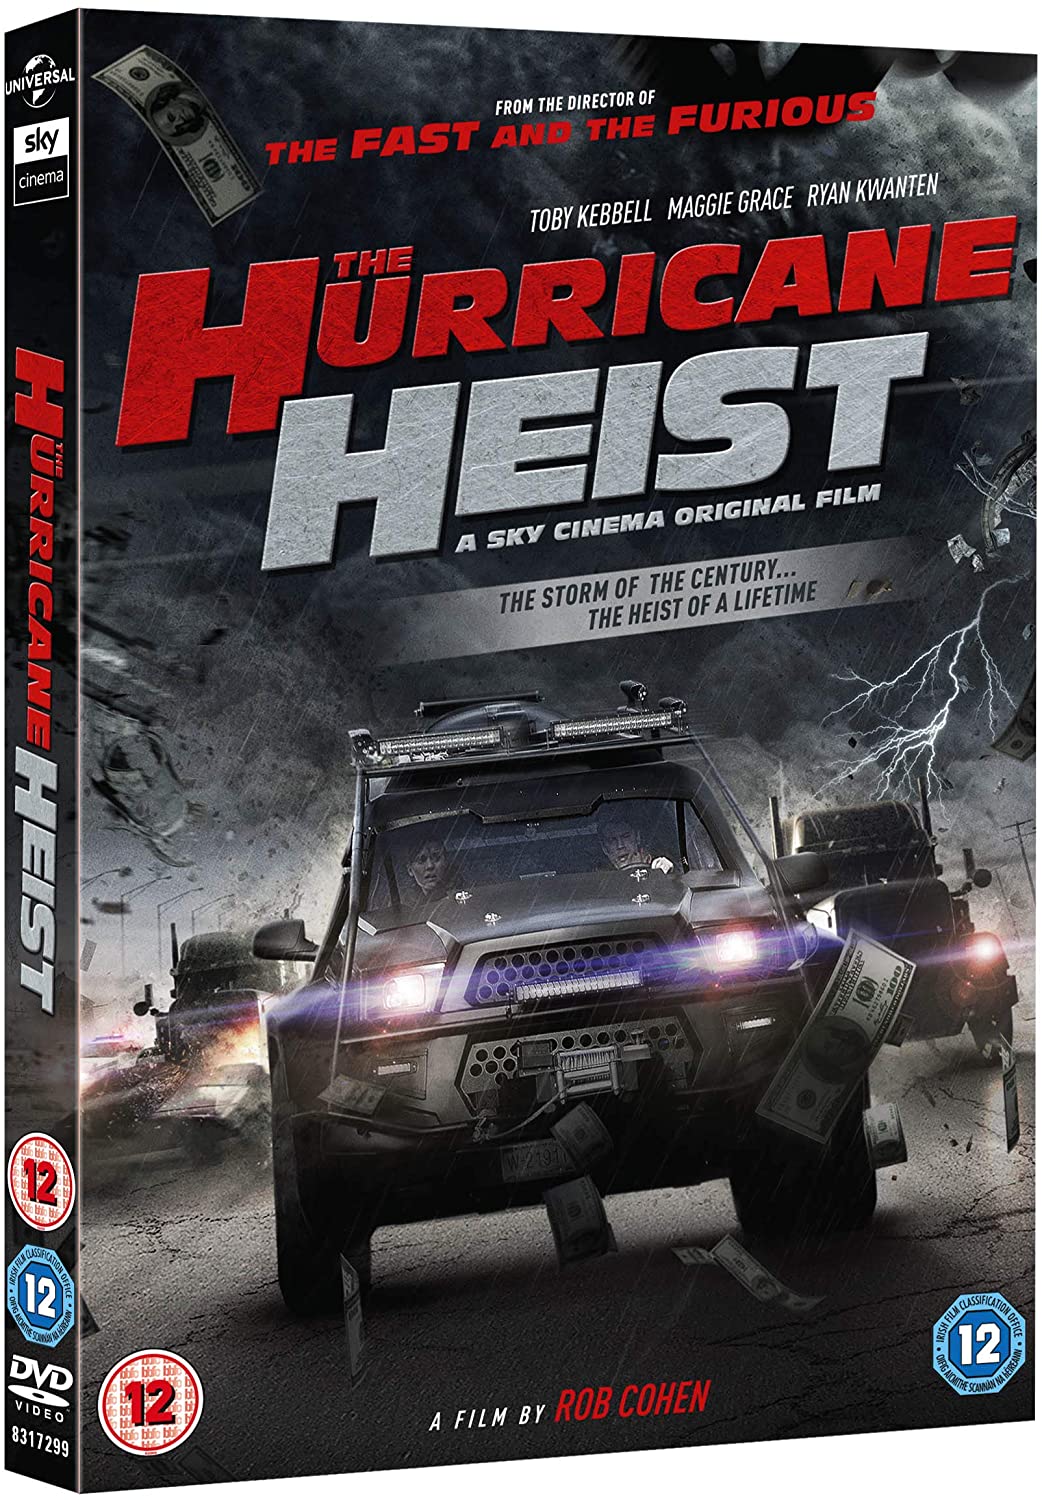 The Hurricane Heist - Action/Thriller [DVD]